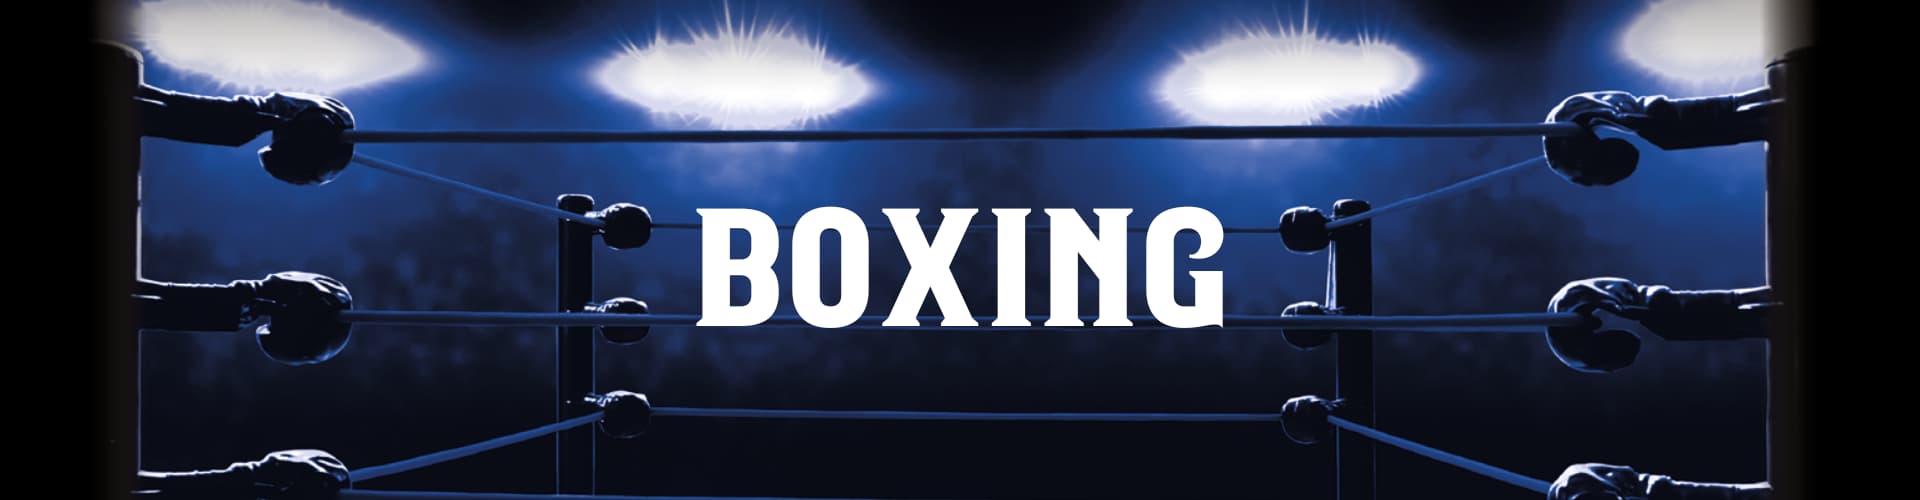 Watch Live Boxing in Ashby-de-la-zouch at Bulls Head Pub